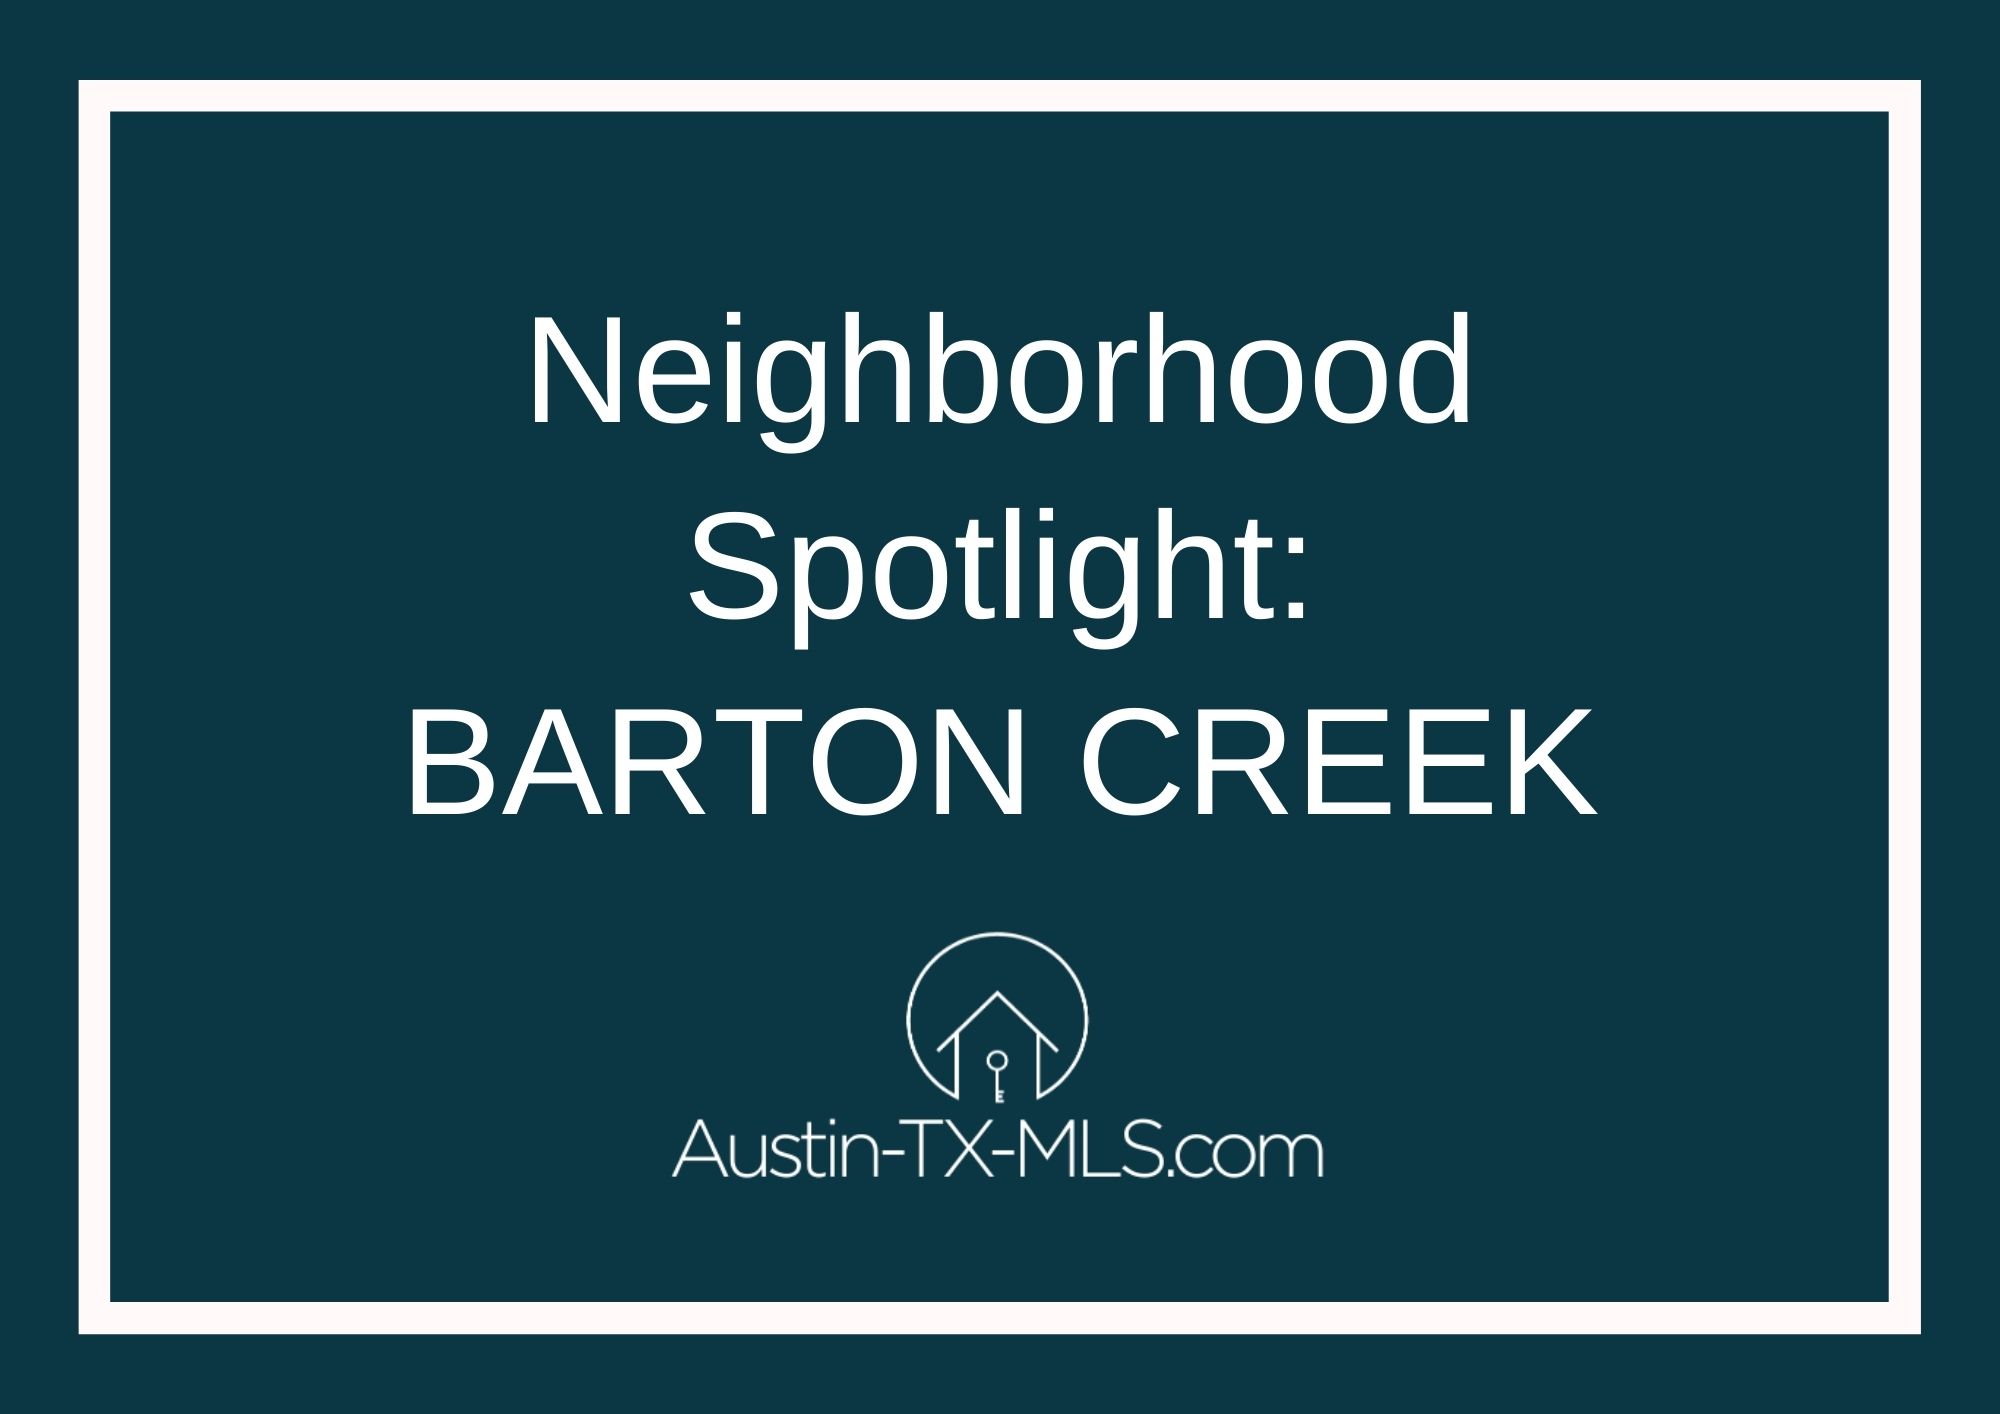 Barton Creek Neighborhood Spotlight Austin Texas real estate